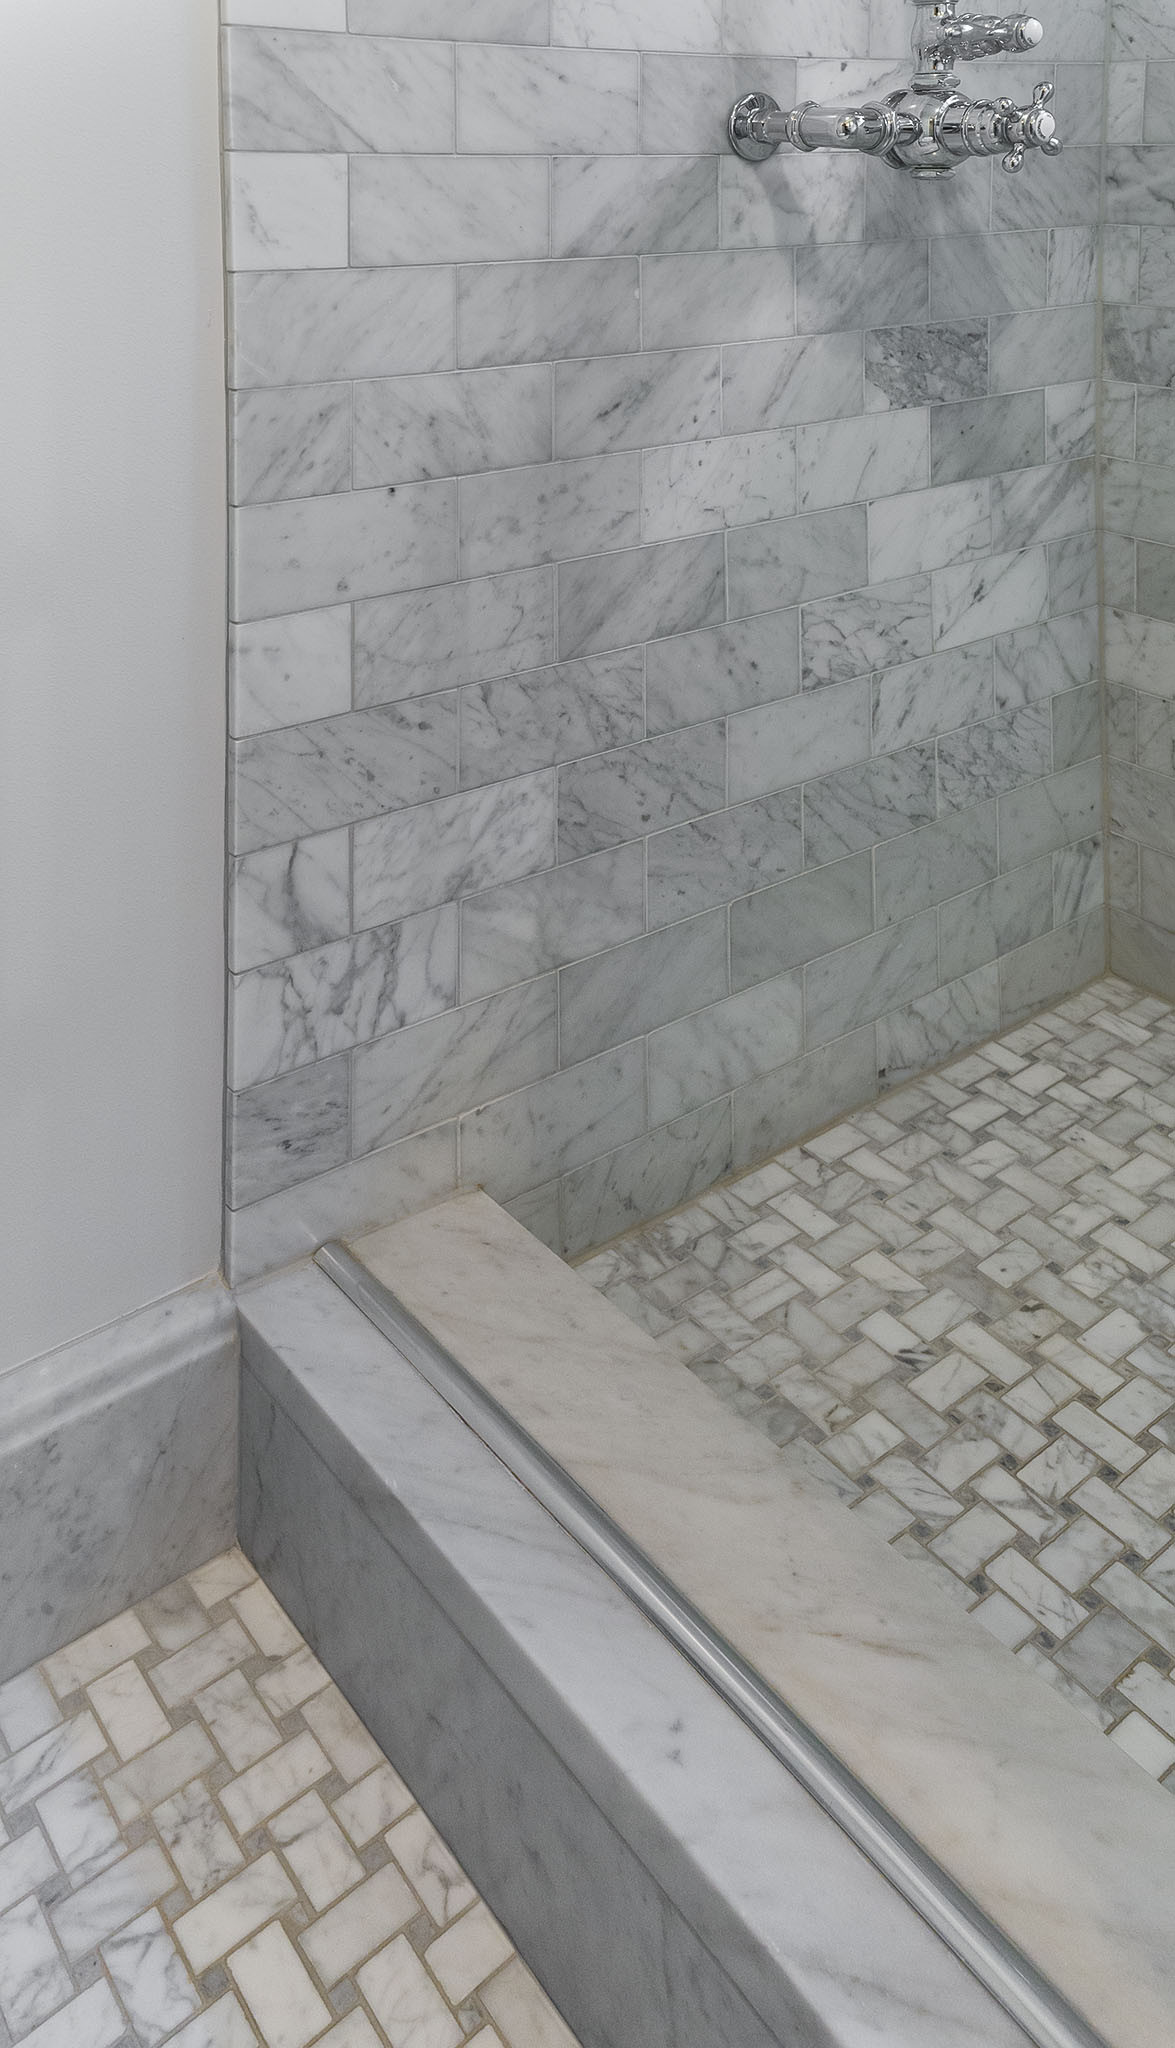 Basket Weave Bathroom Floor Tile
 Bathroom Gallery Gain inspiration and view Bathroom Projects